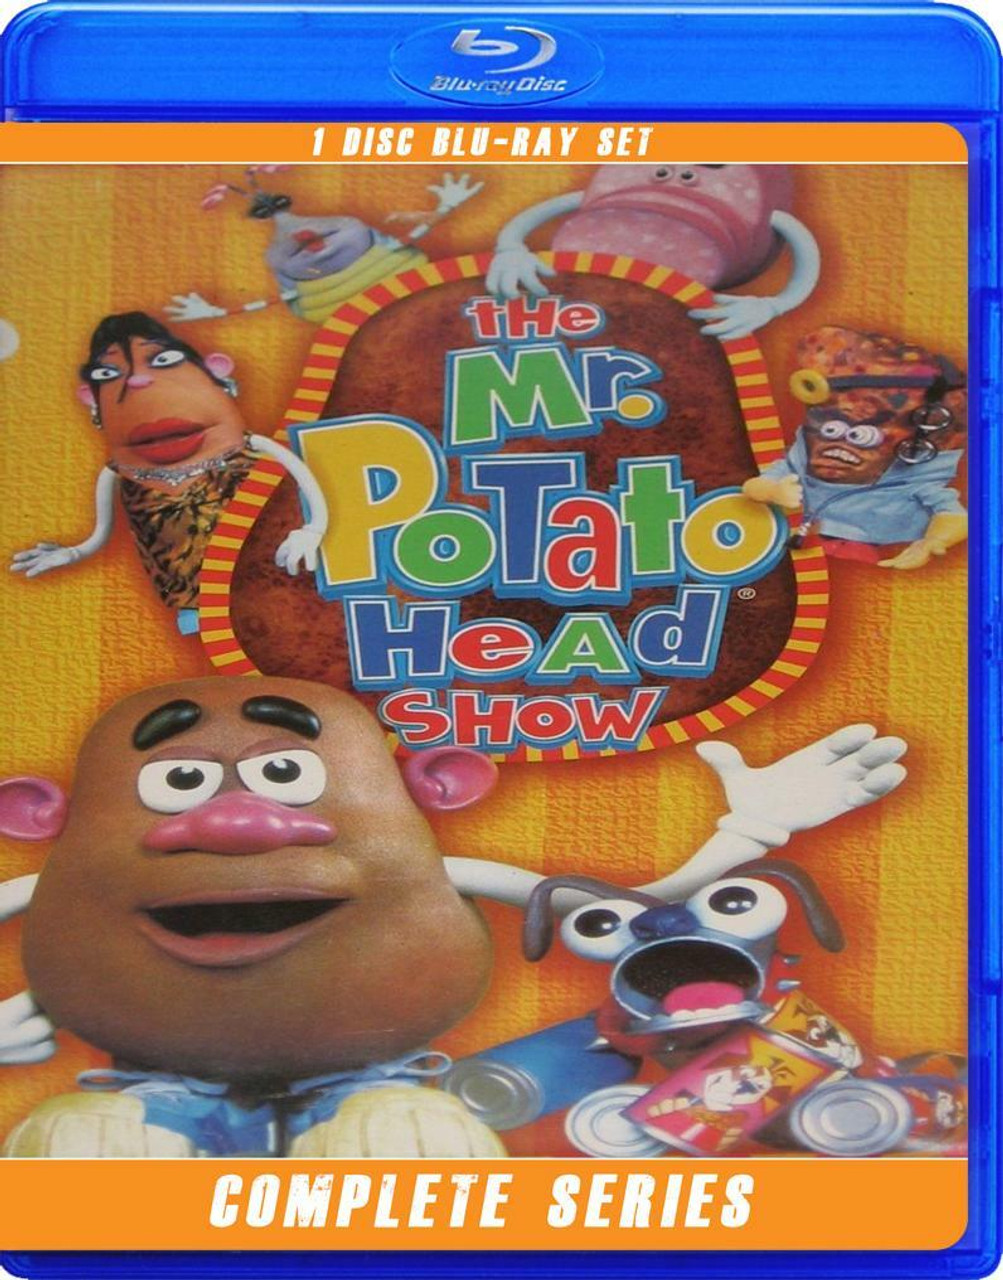 Mr. Potato Head Show, The - Asuka The Disc Dog